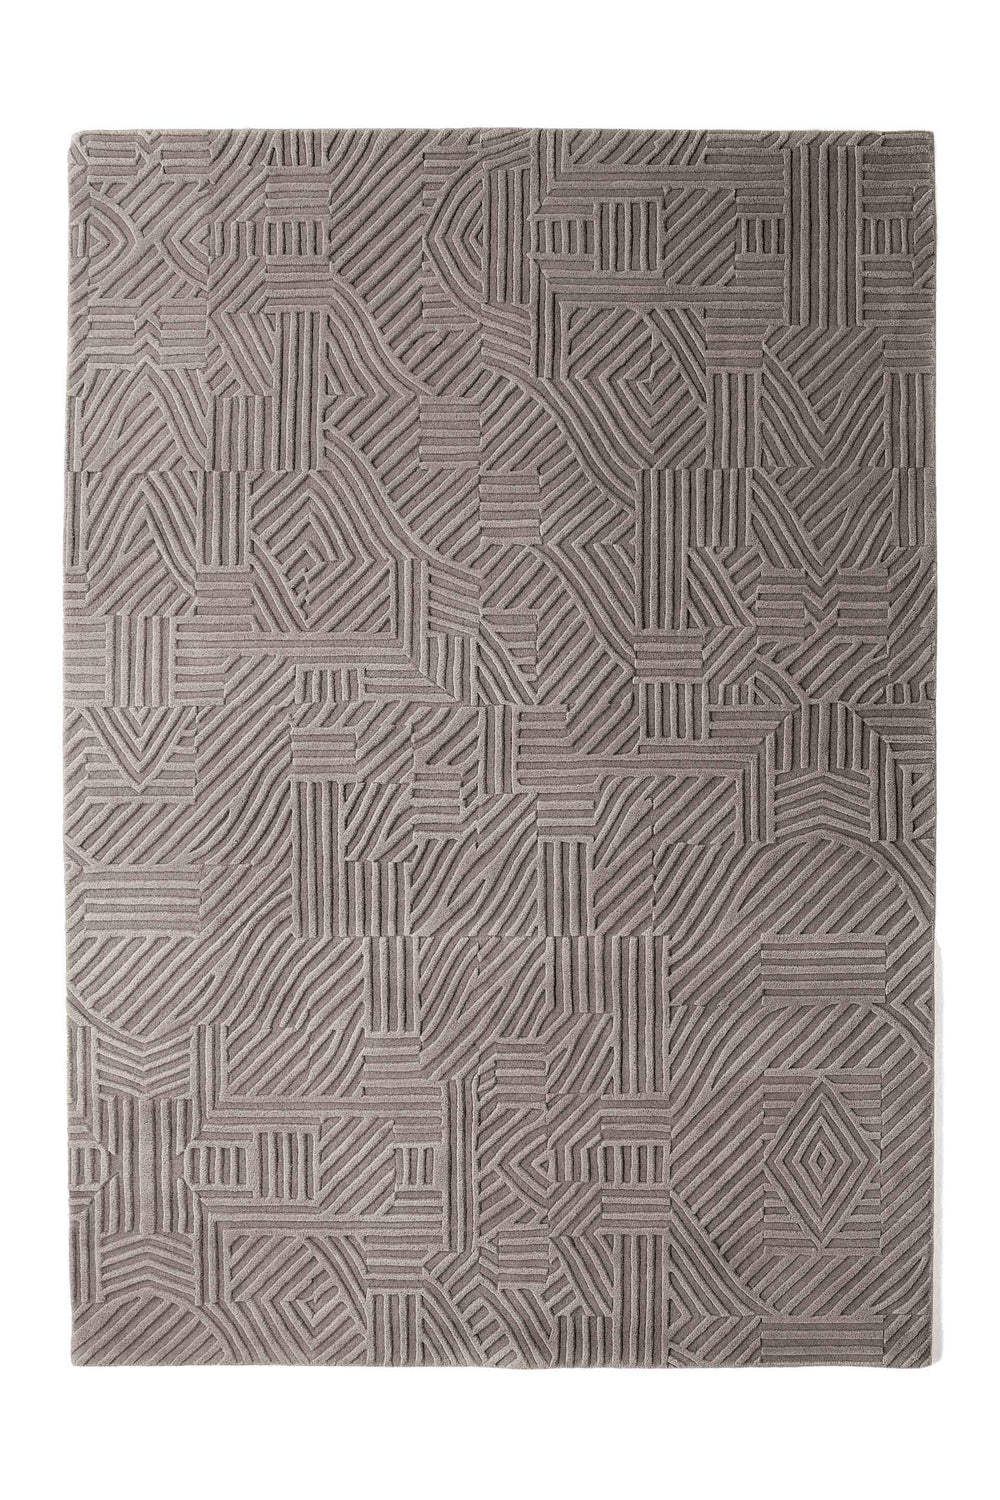 Milton Glaser African Pattern 2 Rug